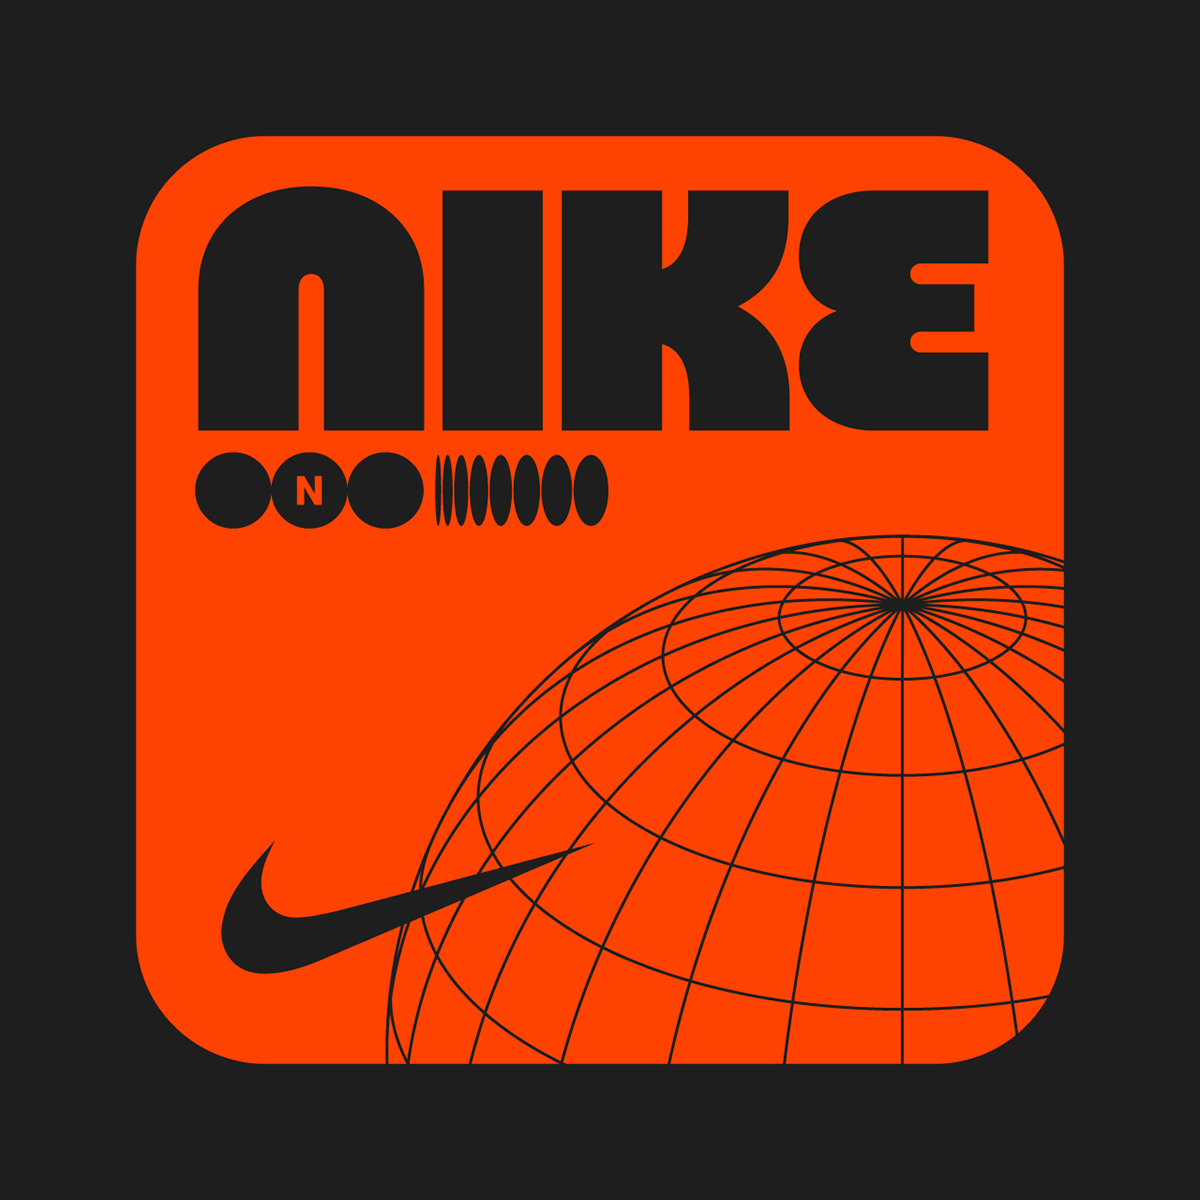 Nike ikea japan santa cruz skateboards Netflix Love instagram oreo George Orwell 1984 spotify